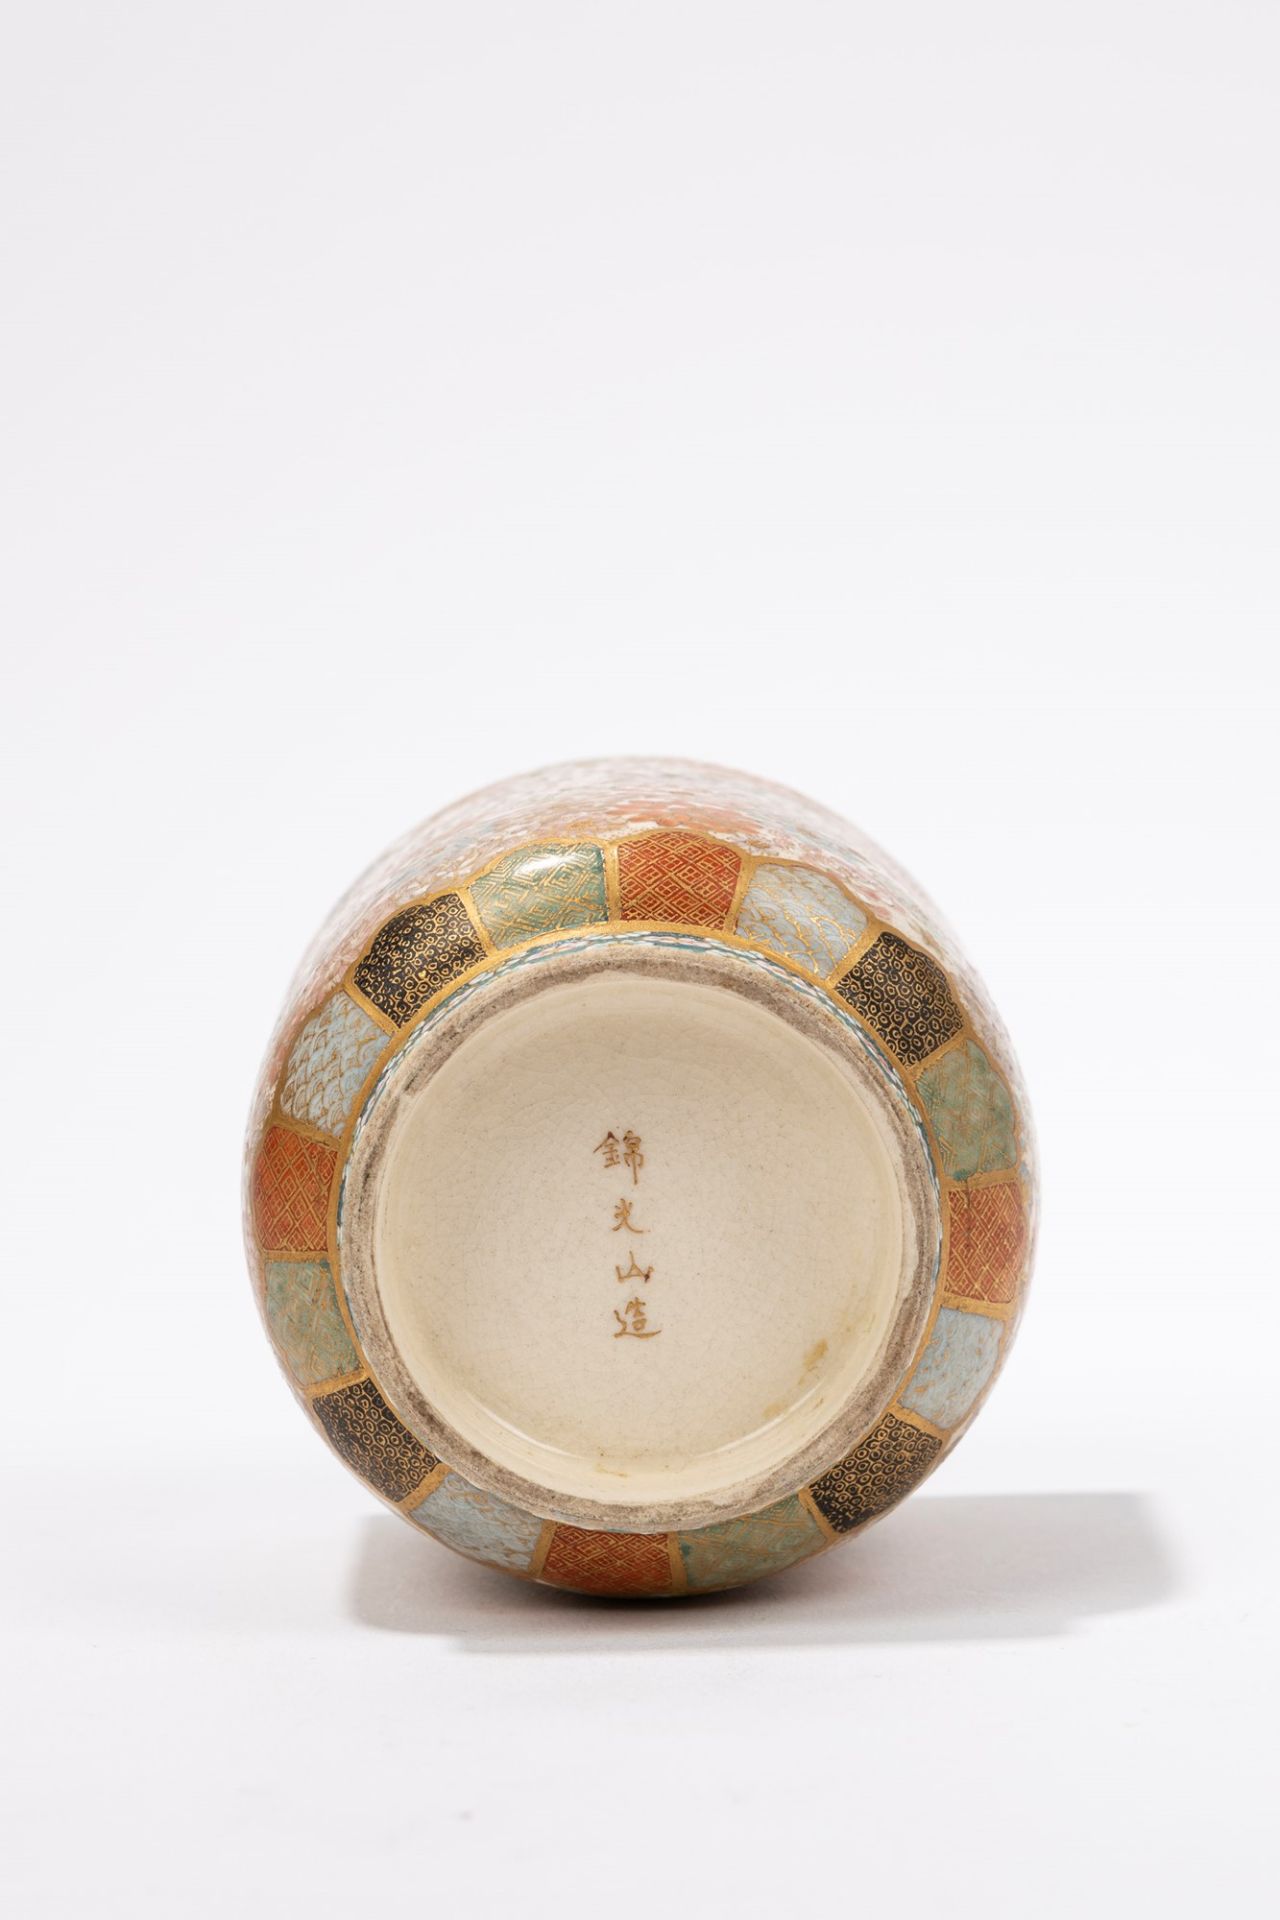 SMALL SATSUMA CUP, Japan, Meiji period (1868-1912) - Image 3 of 3